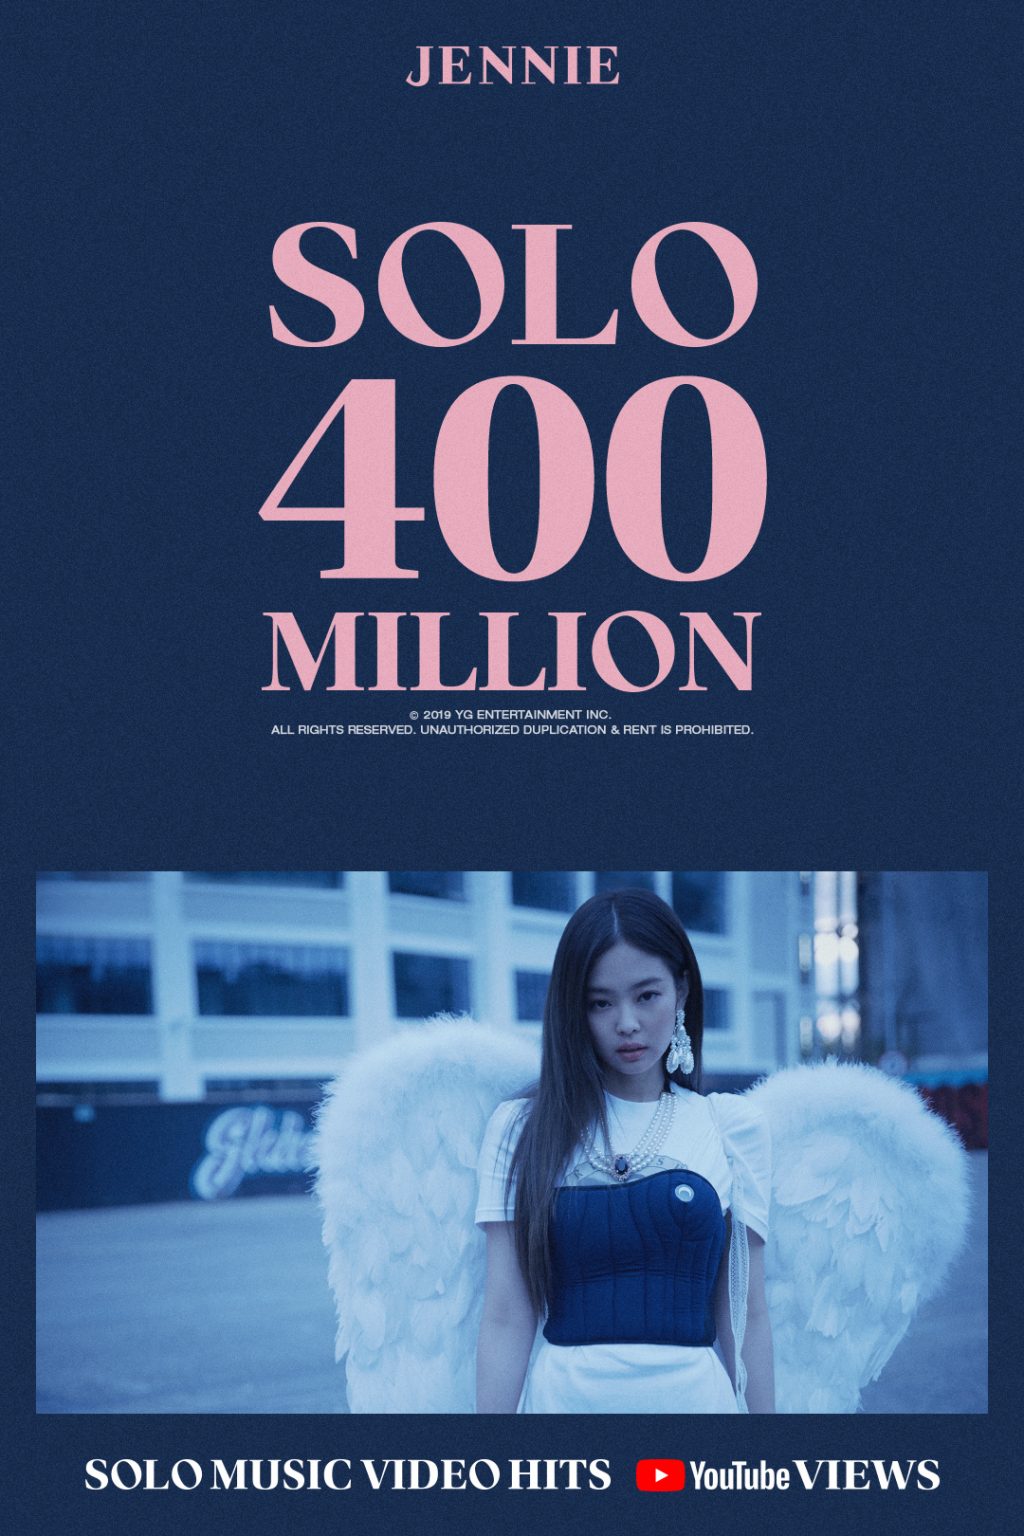 Jennie Celebrates SOLO 400M Views By Posting New Photos